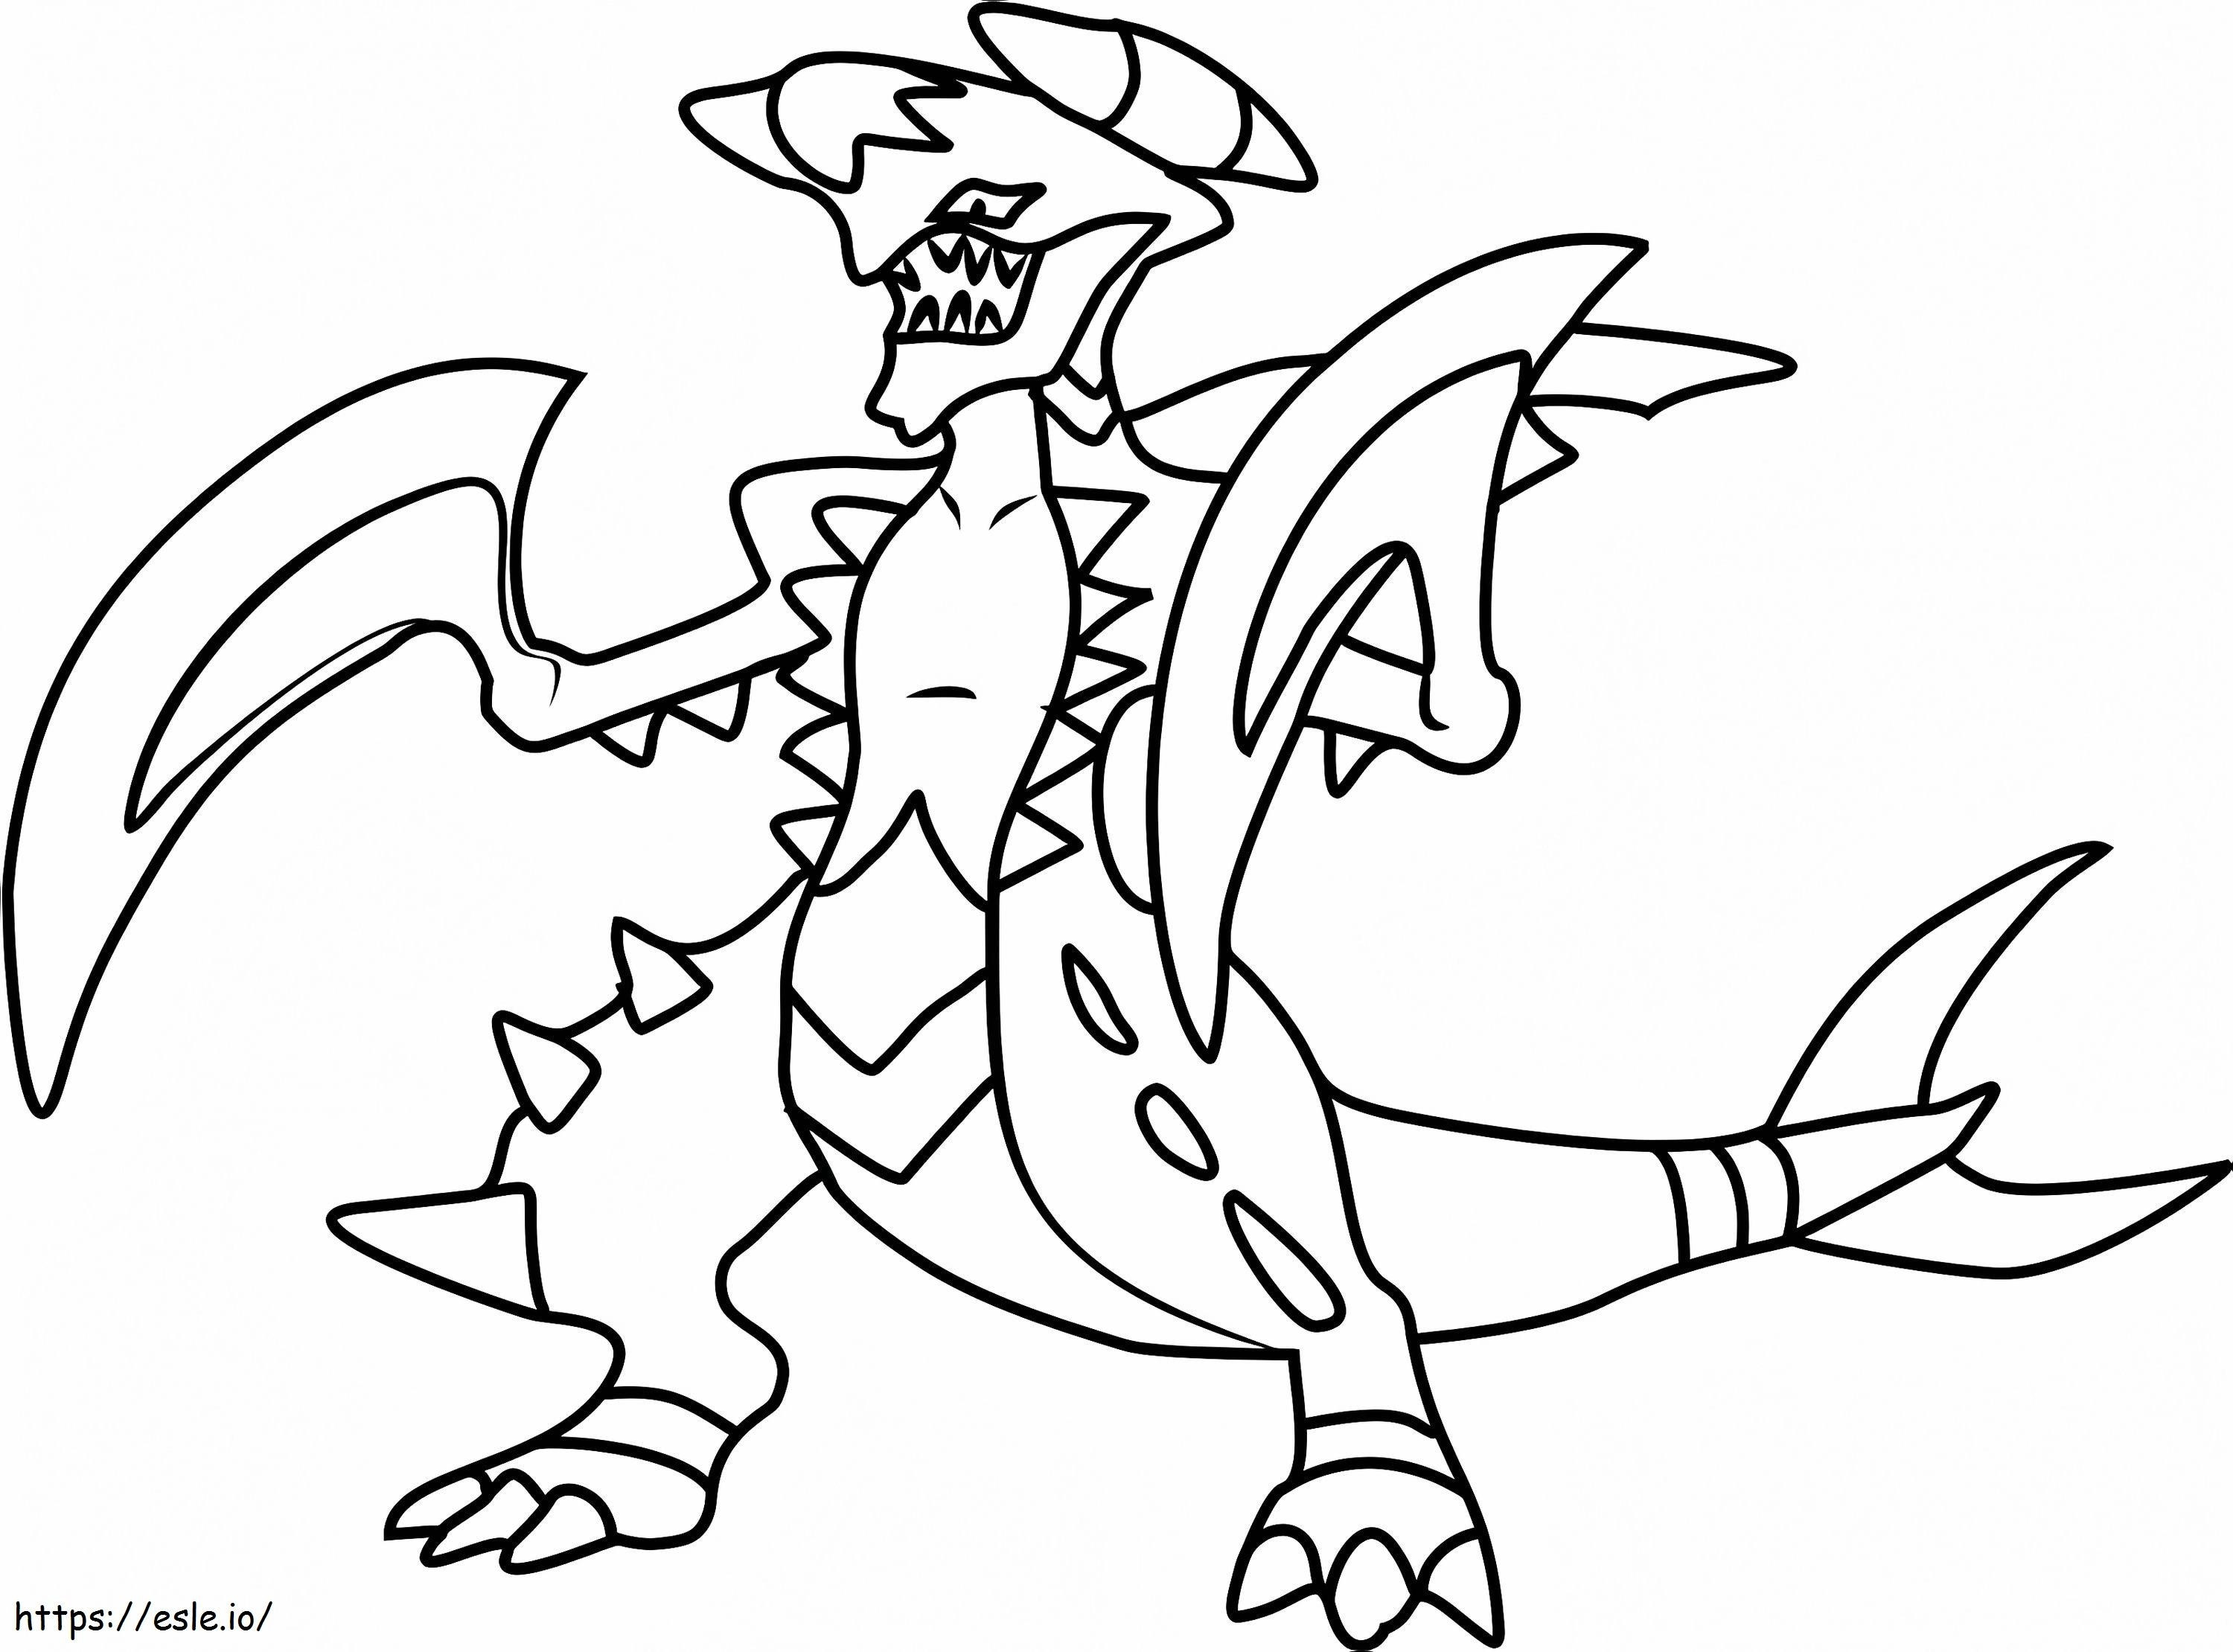 Garchomp Pokemon A4 coloring page